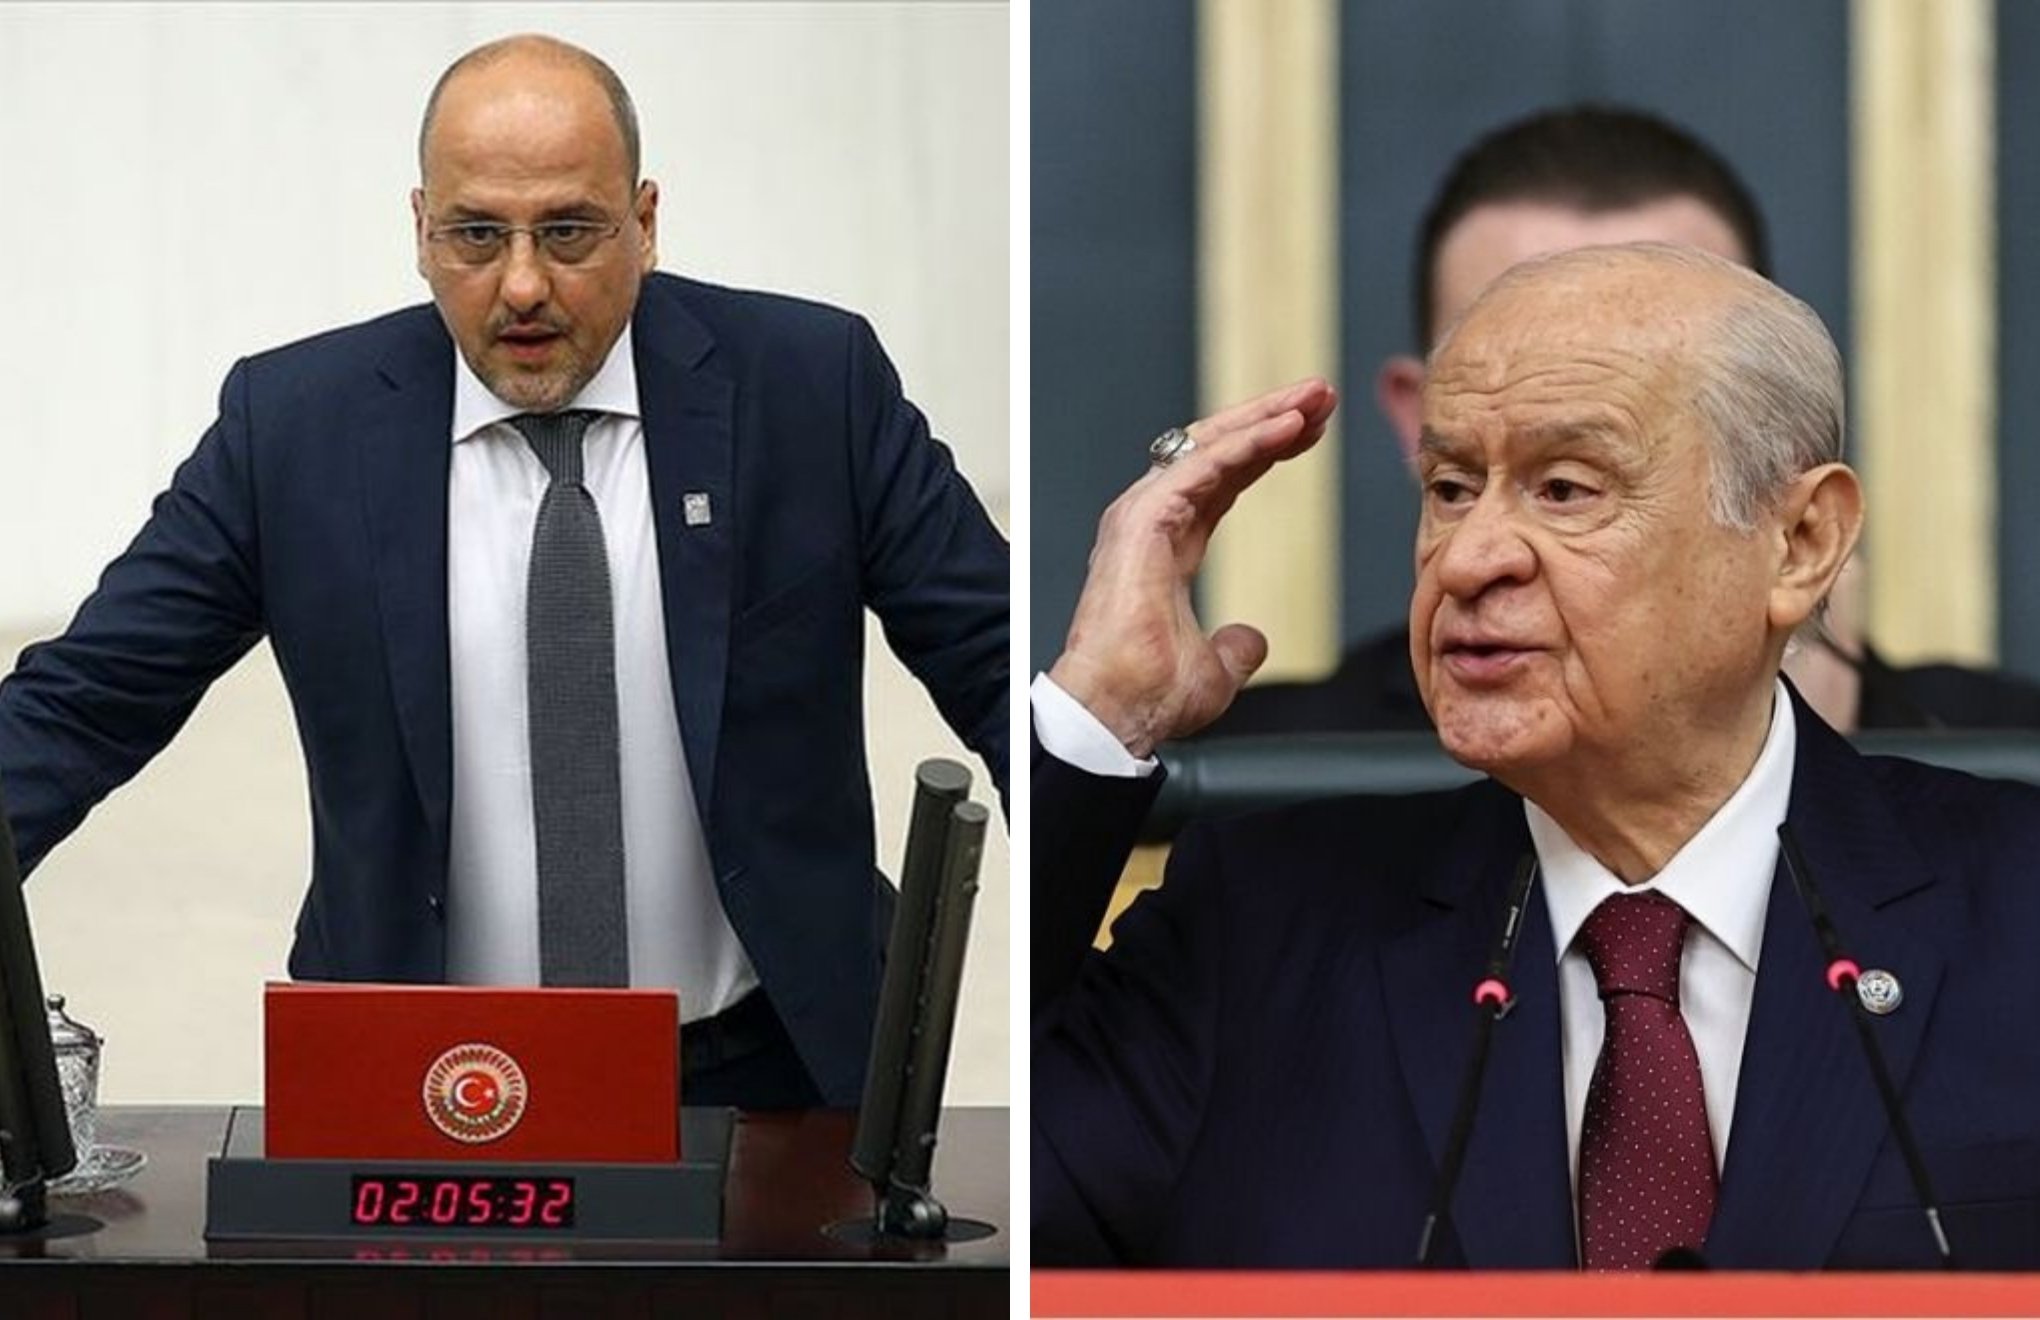 MP Ahmet Şık files a criminal complaint against MHP Chair Bahçeli